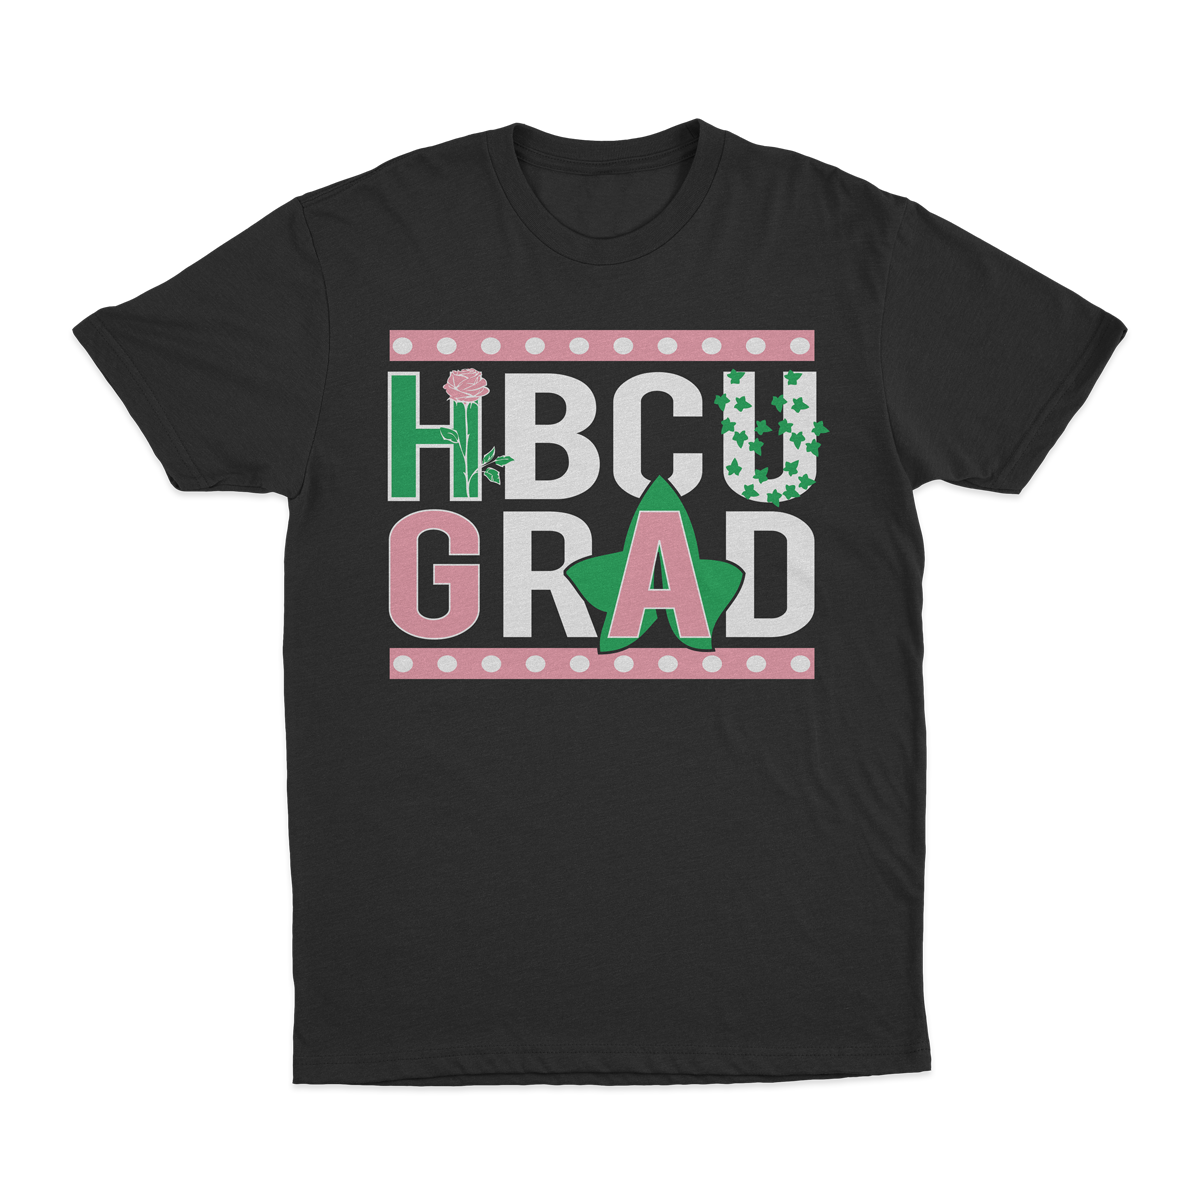 HBCU GRAD | Pearl Edition | Tshirt - Black